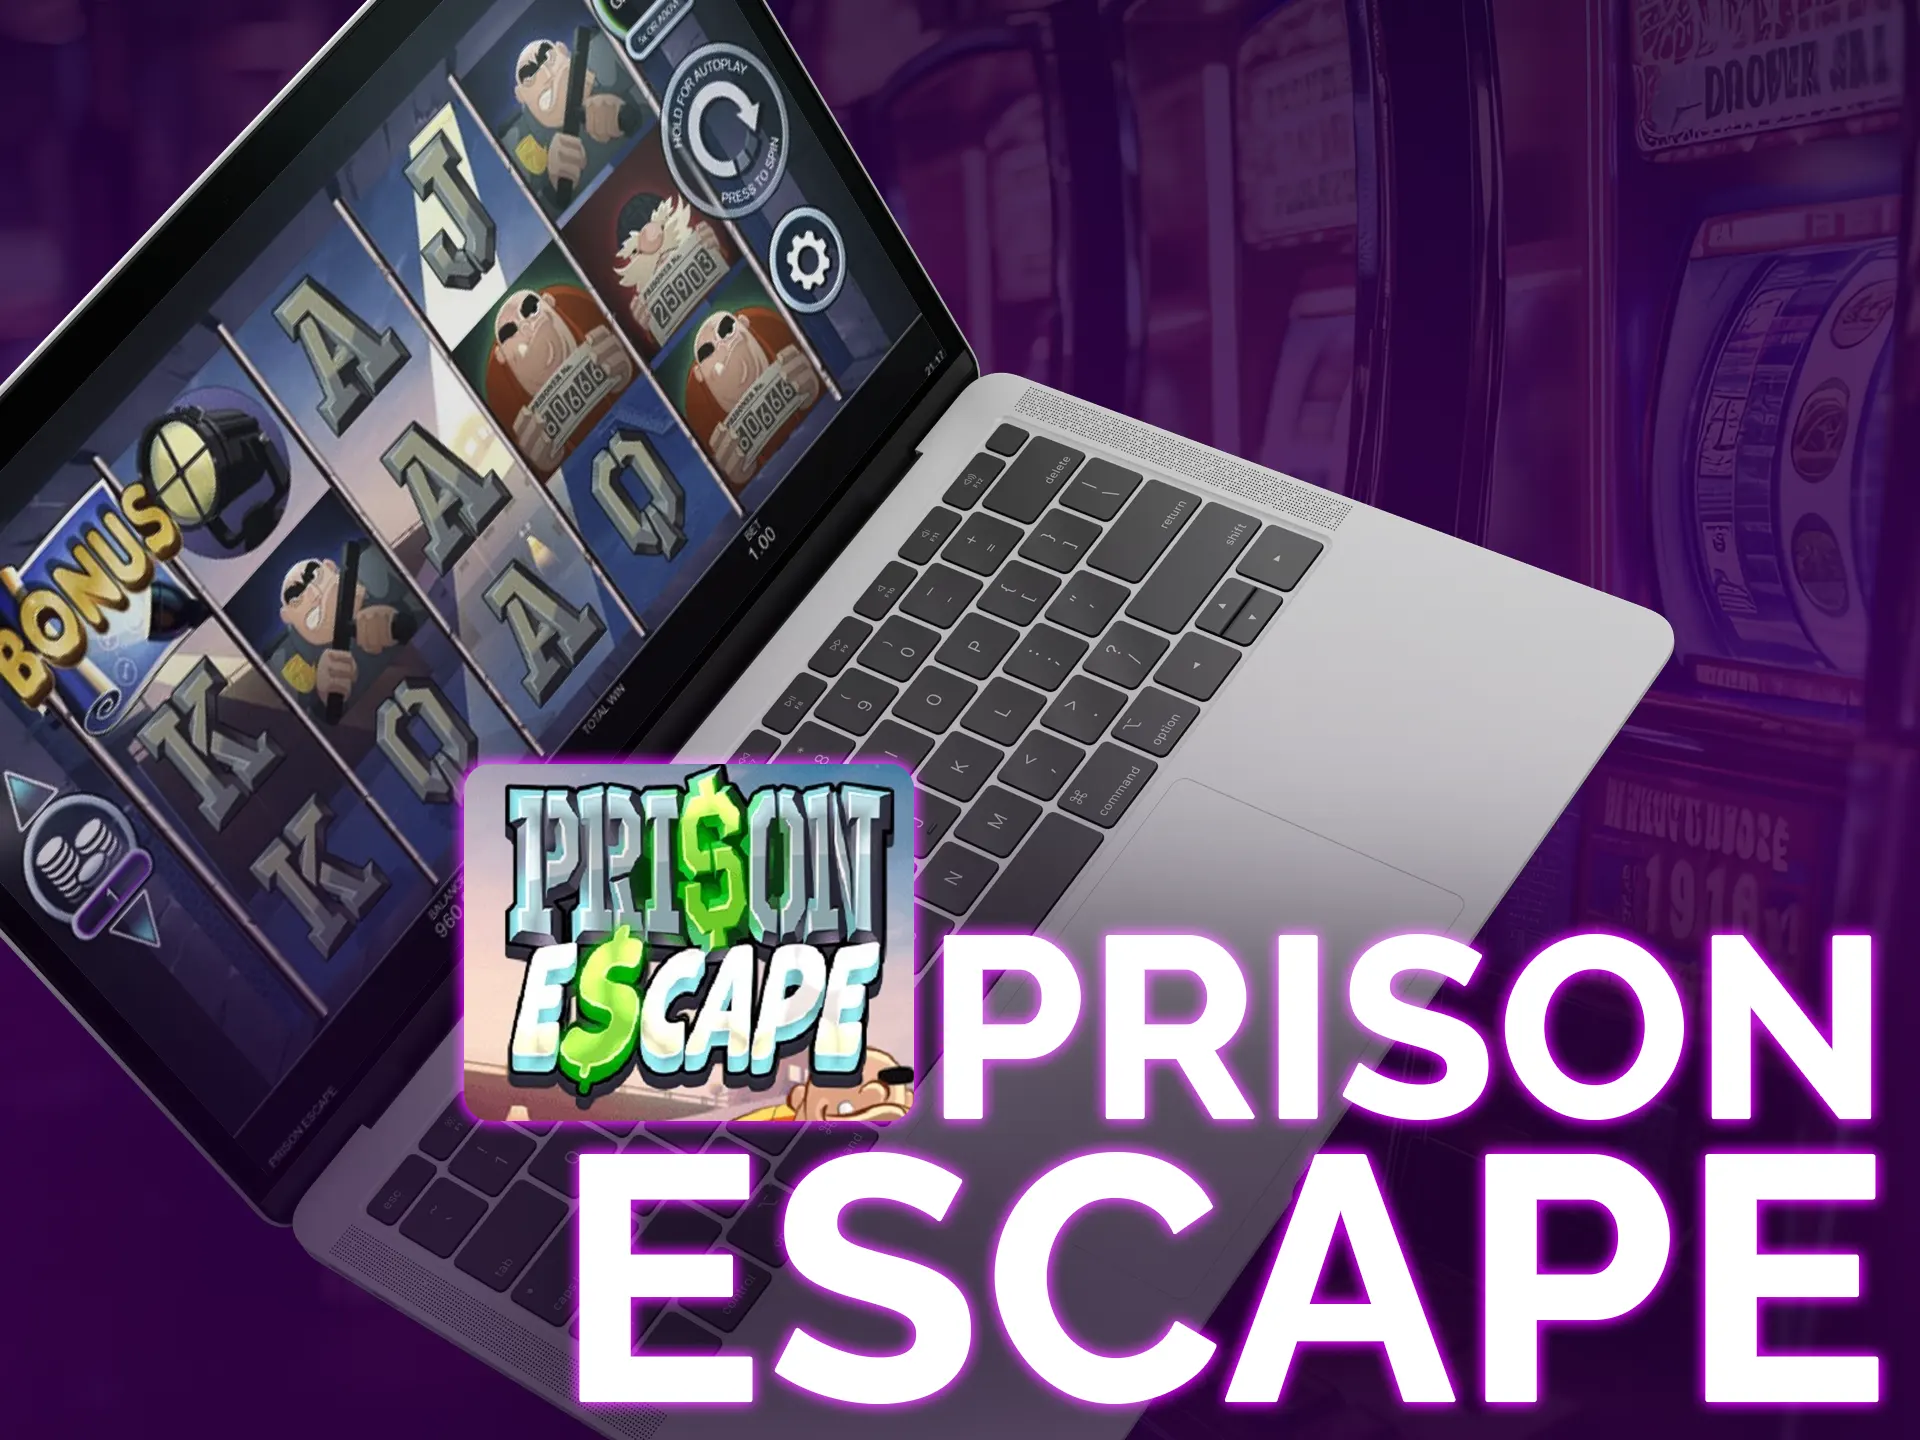 Inspired Gaming's Prison Escape slot offers unique bonus rounds.